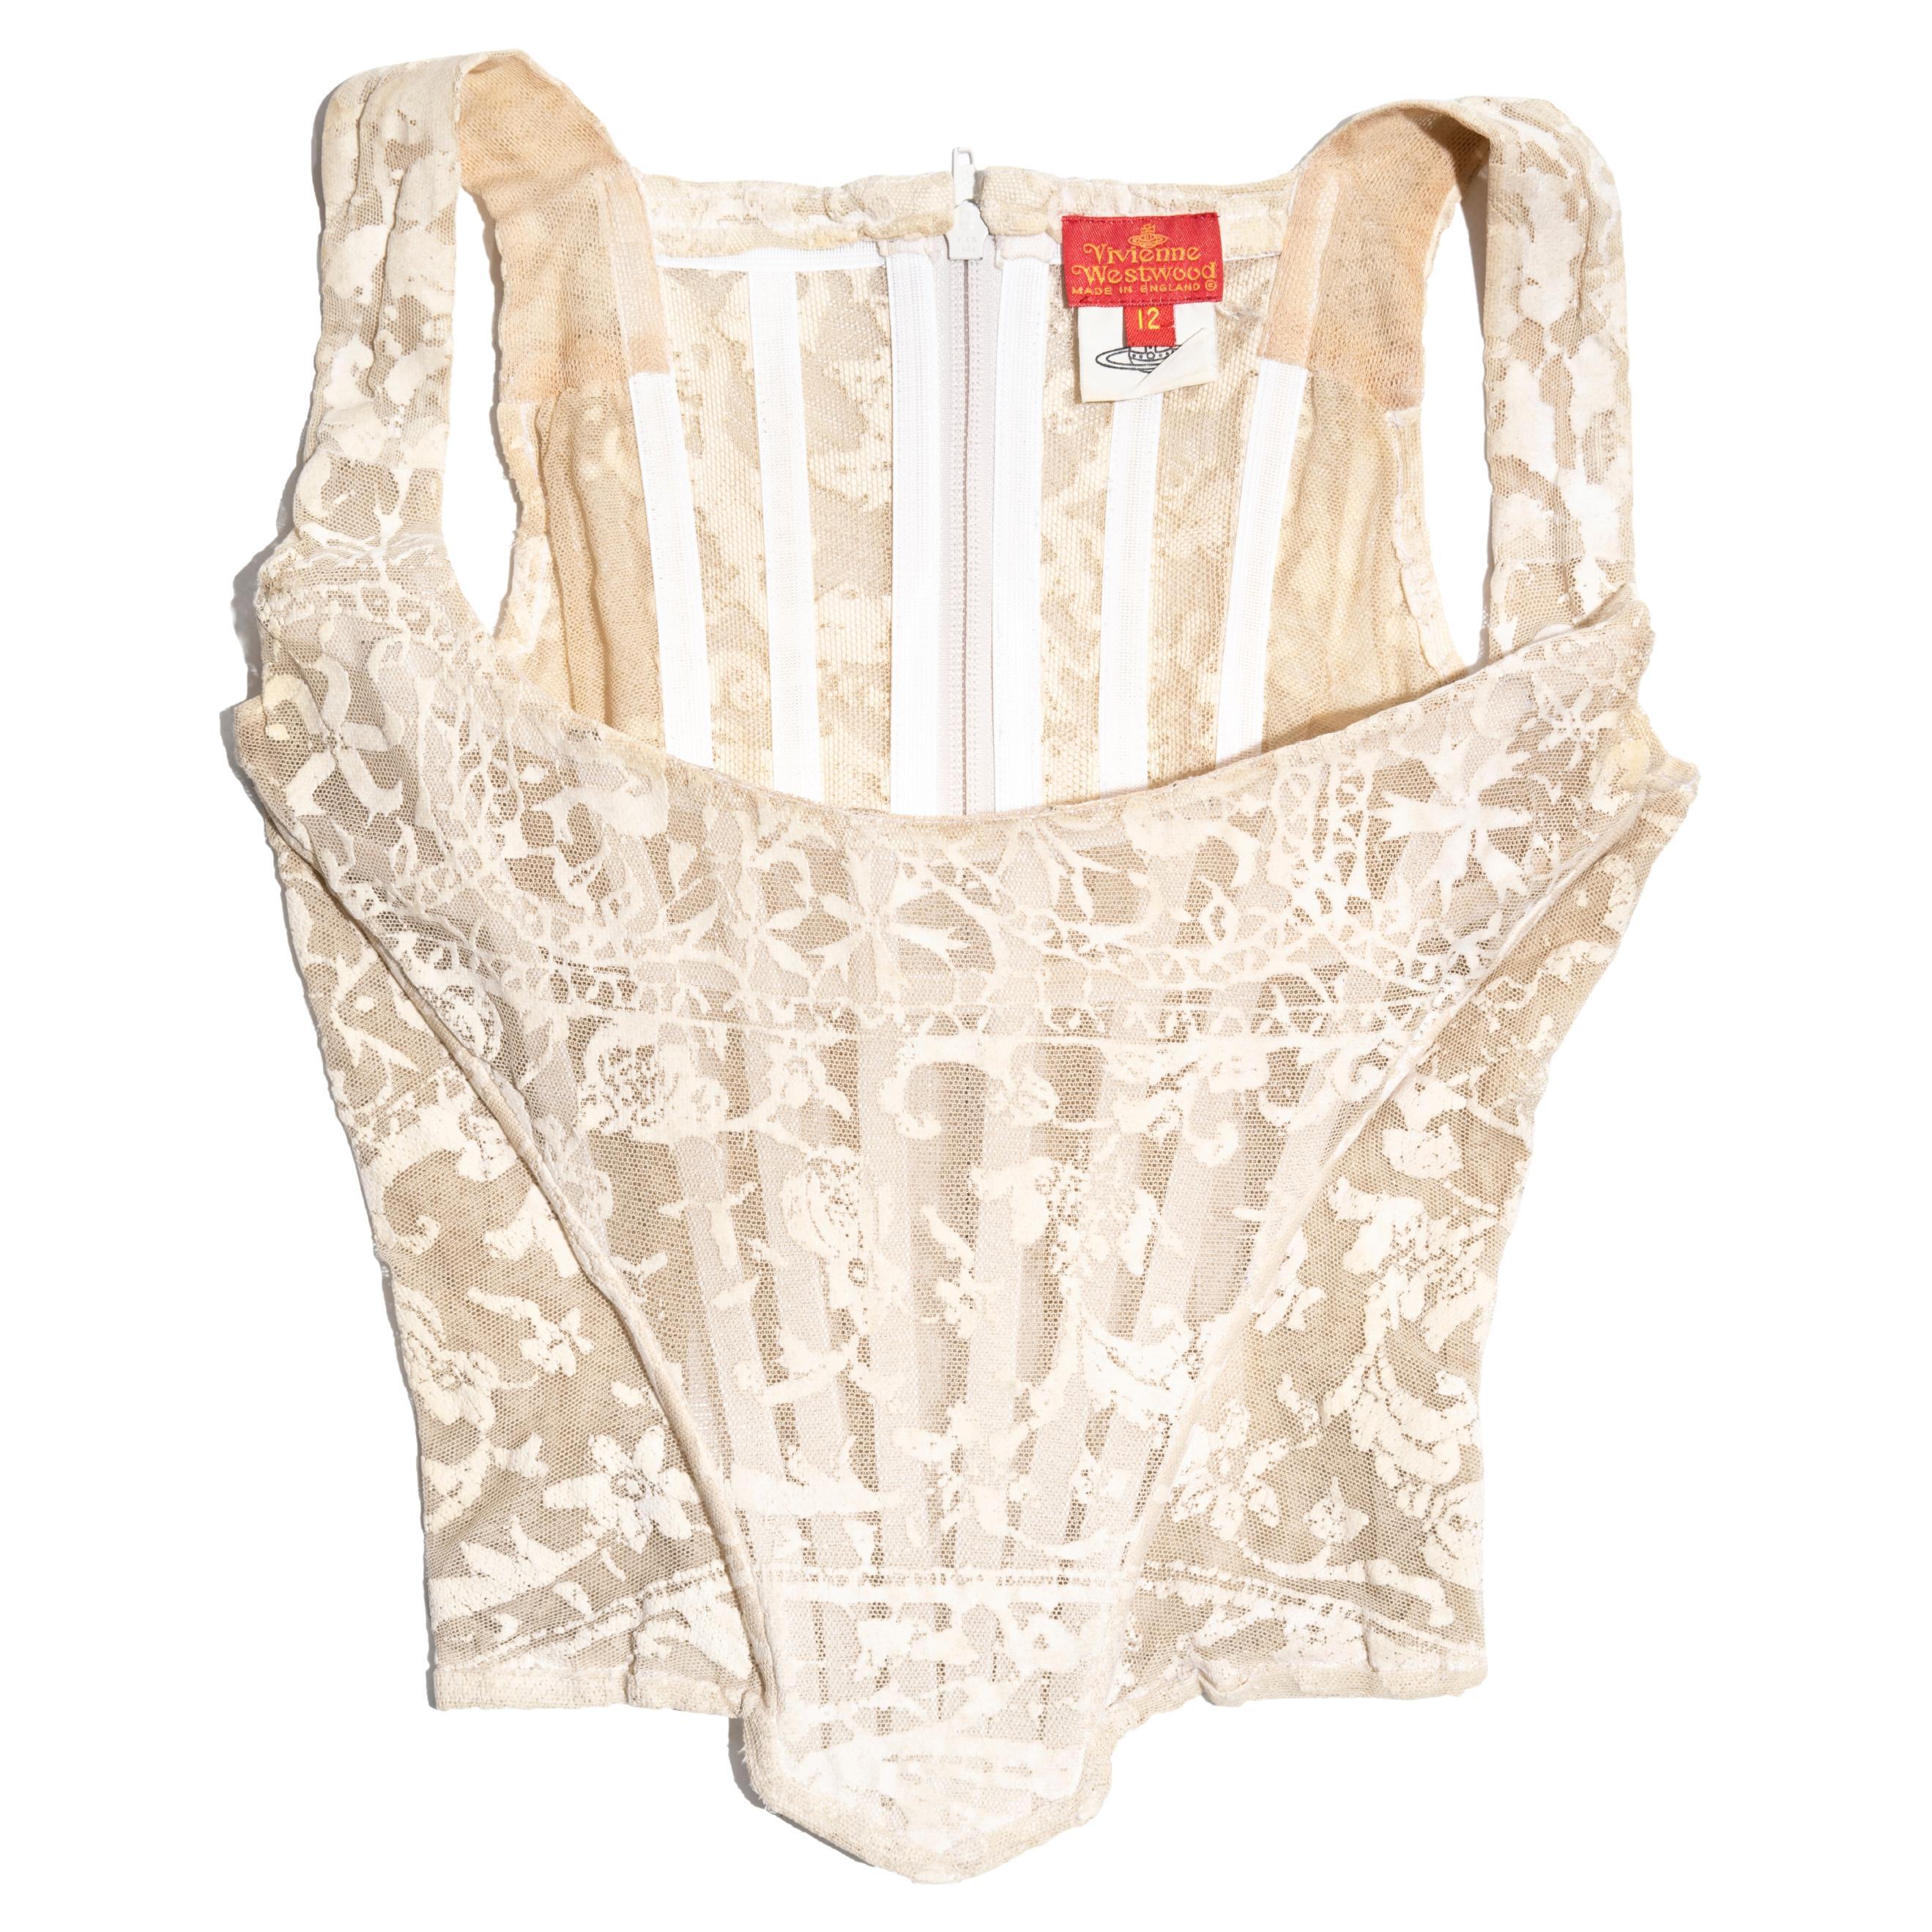 Vivienne Westwood cream cotton mesh corset, fw 1992